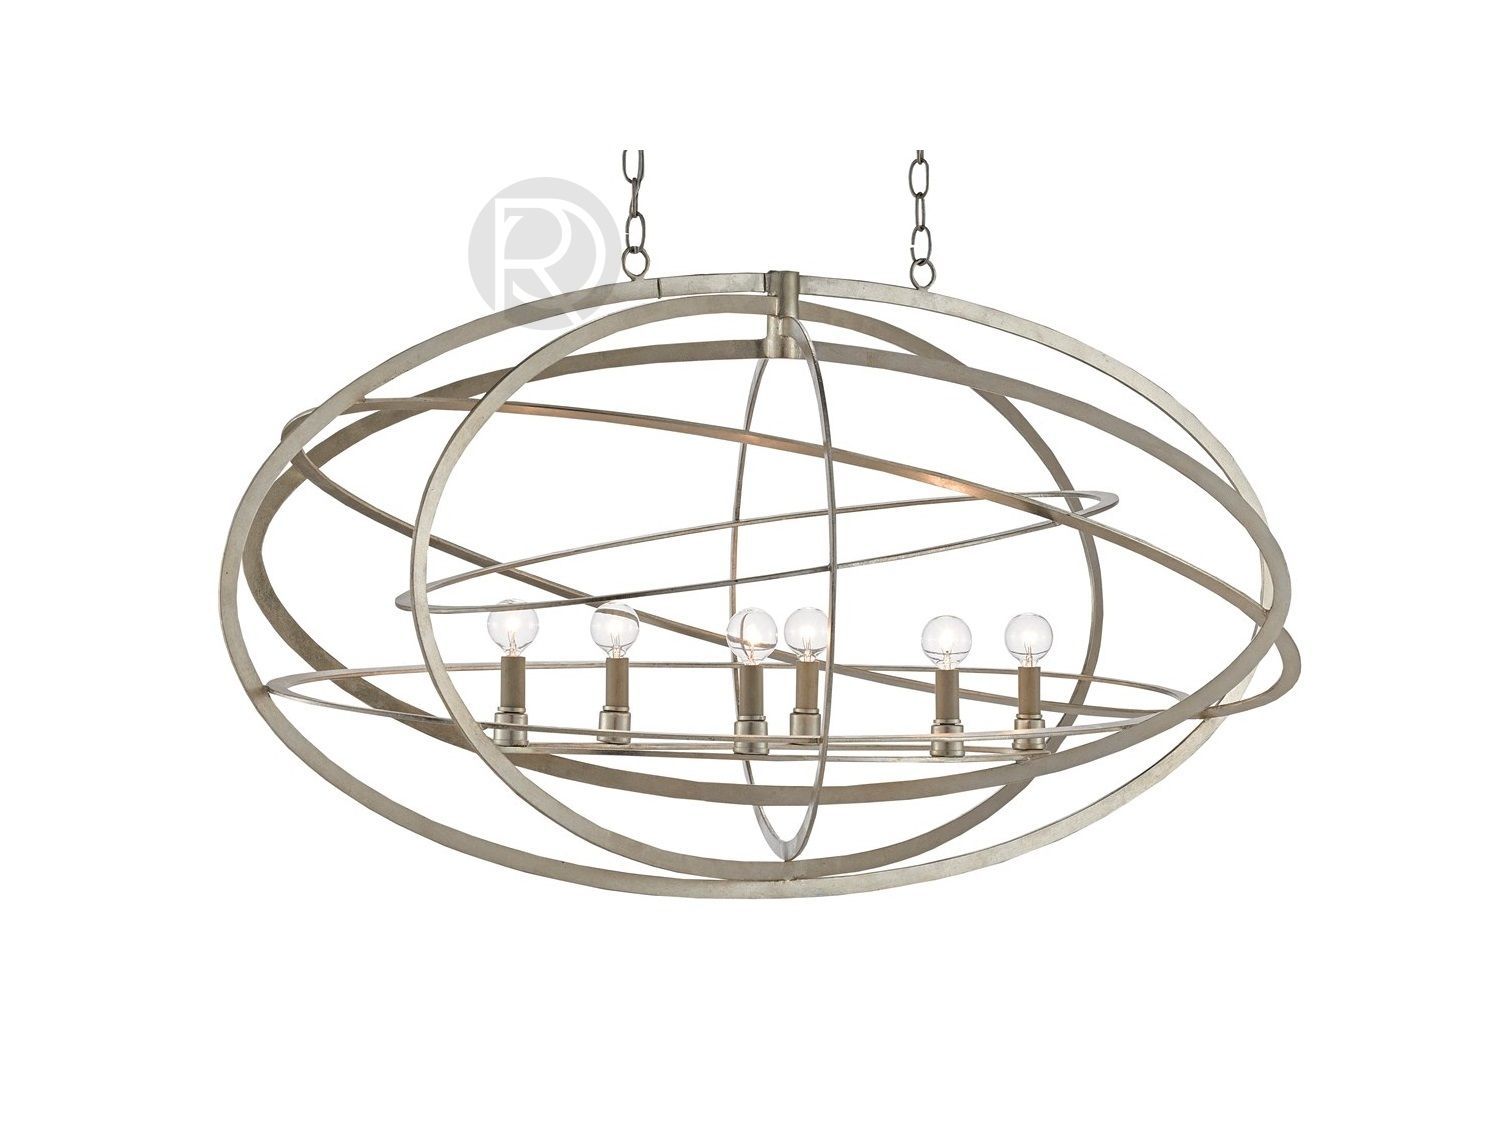 OCTAVIUS chandelier by Currey & Company